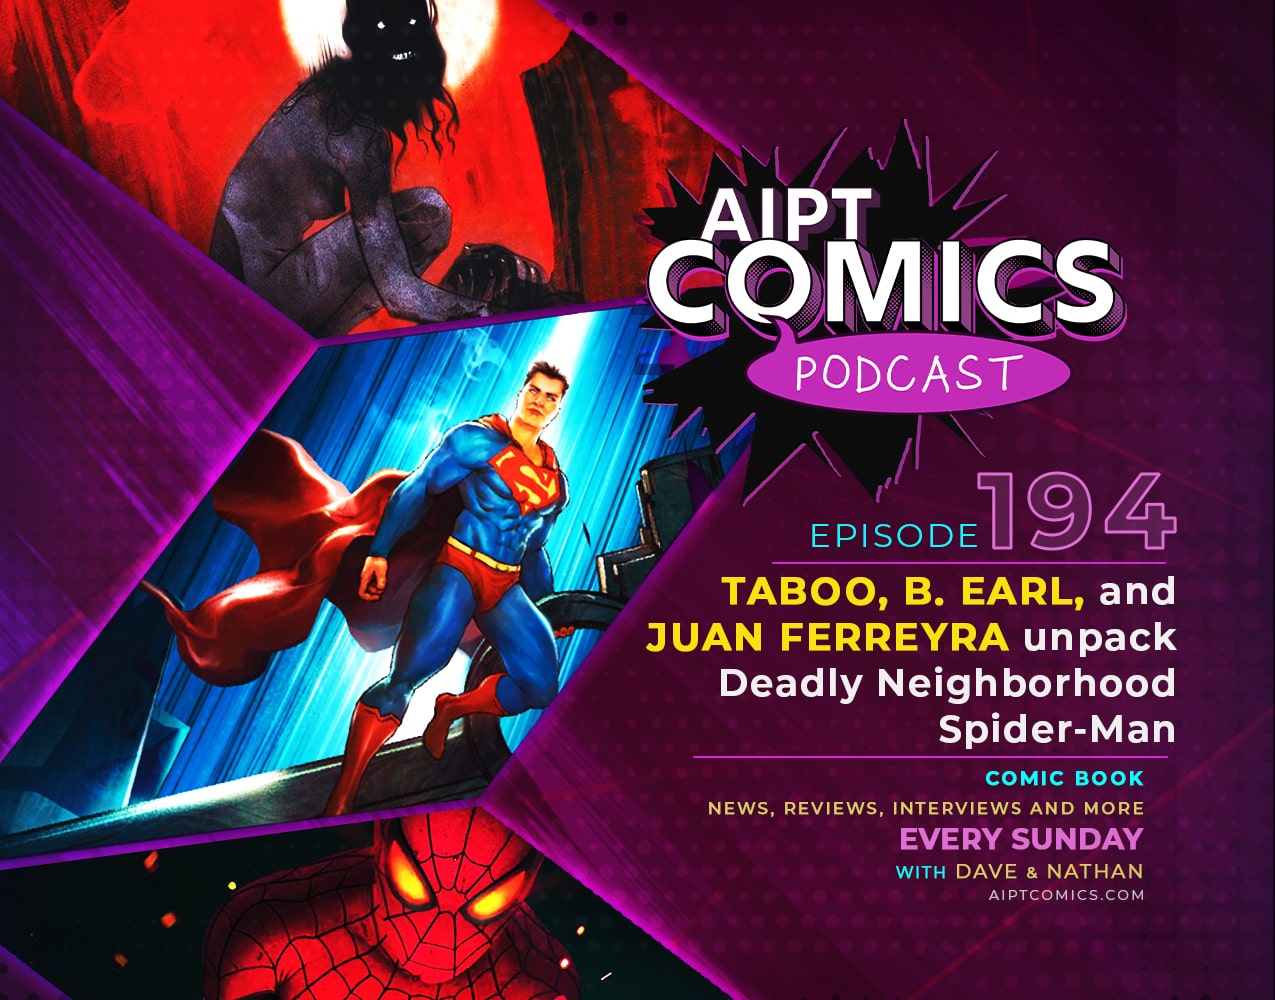 AIPT Comics podcast episode 194: Taboo, B. Earl, and Juan Ferreyra unpack 'Deadly Neighborhood Spider-Man'